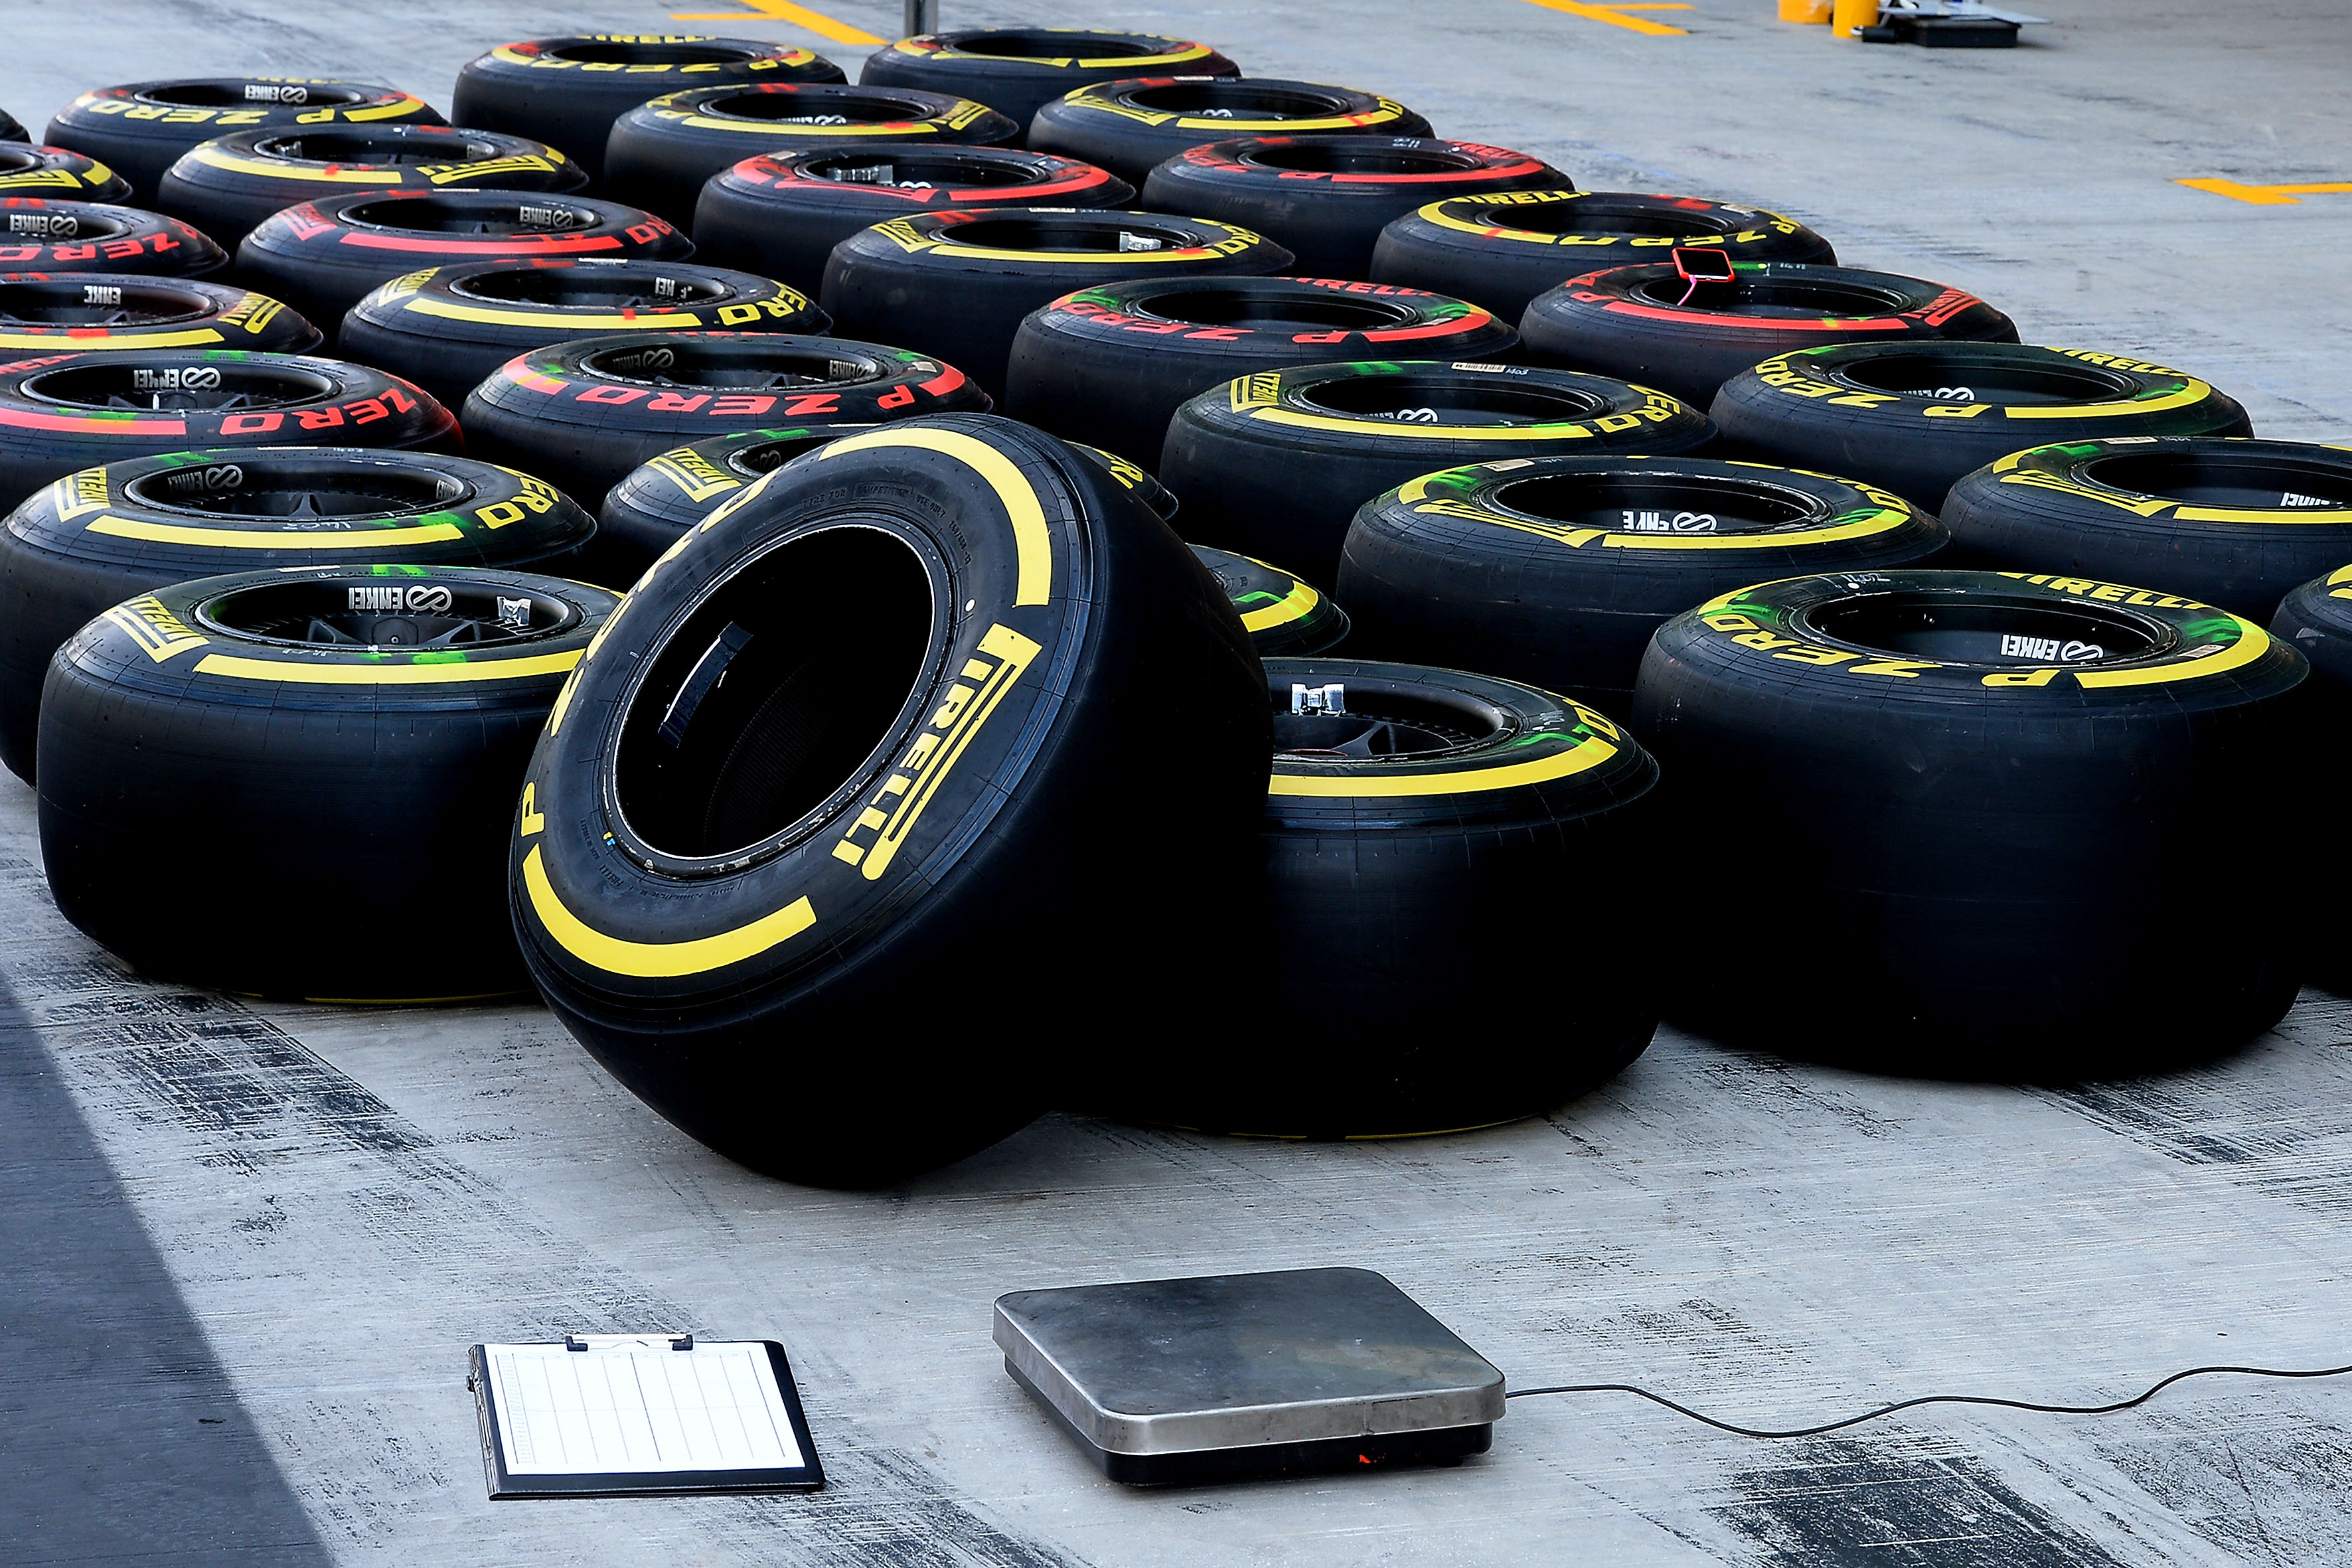 Pirelli Reveals Driver Choices for Australian Grand Prix - F1 Madness